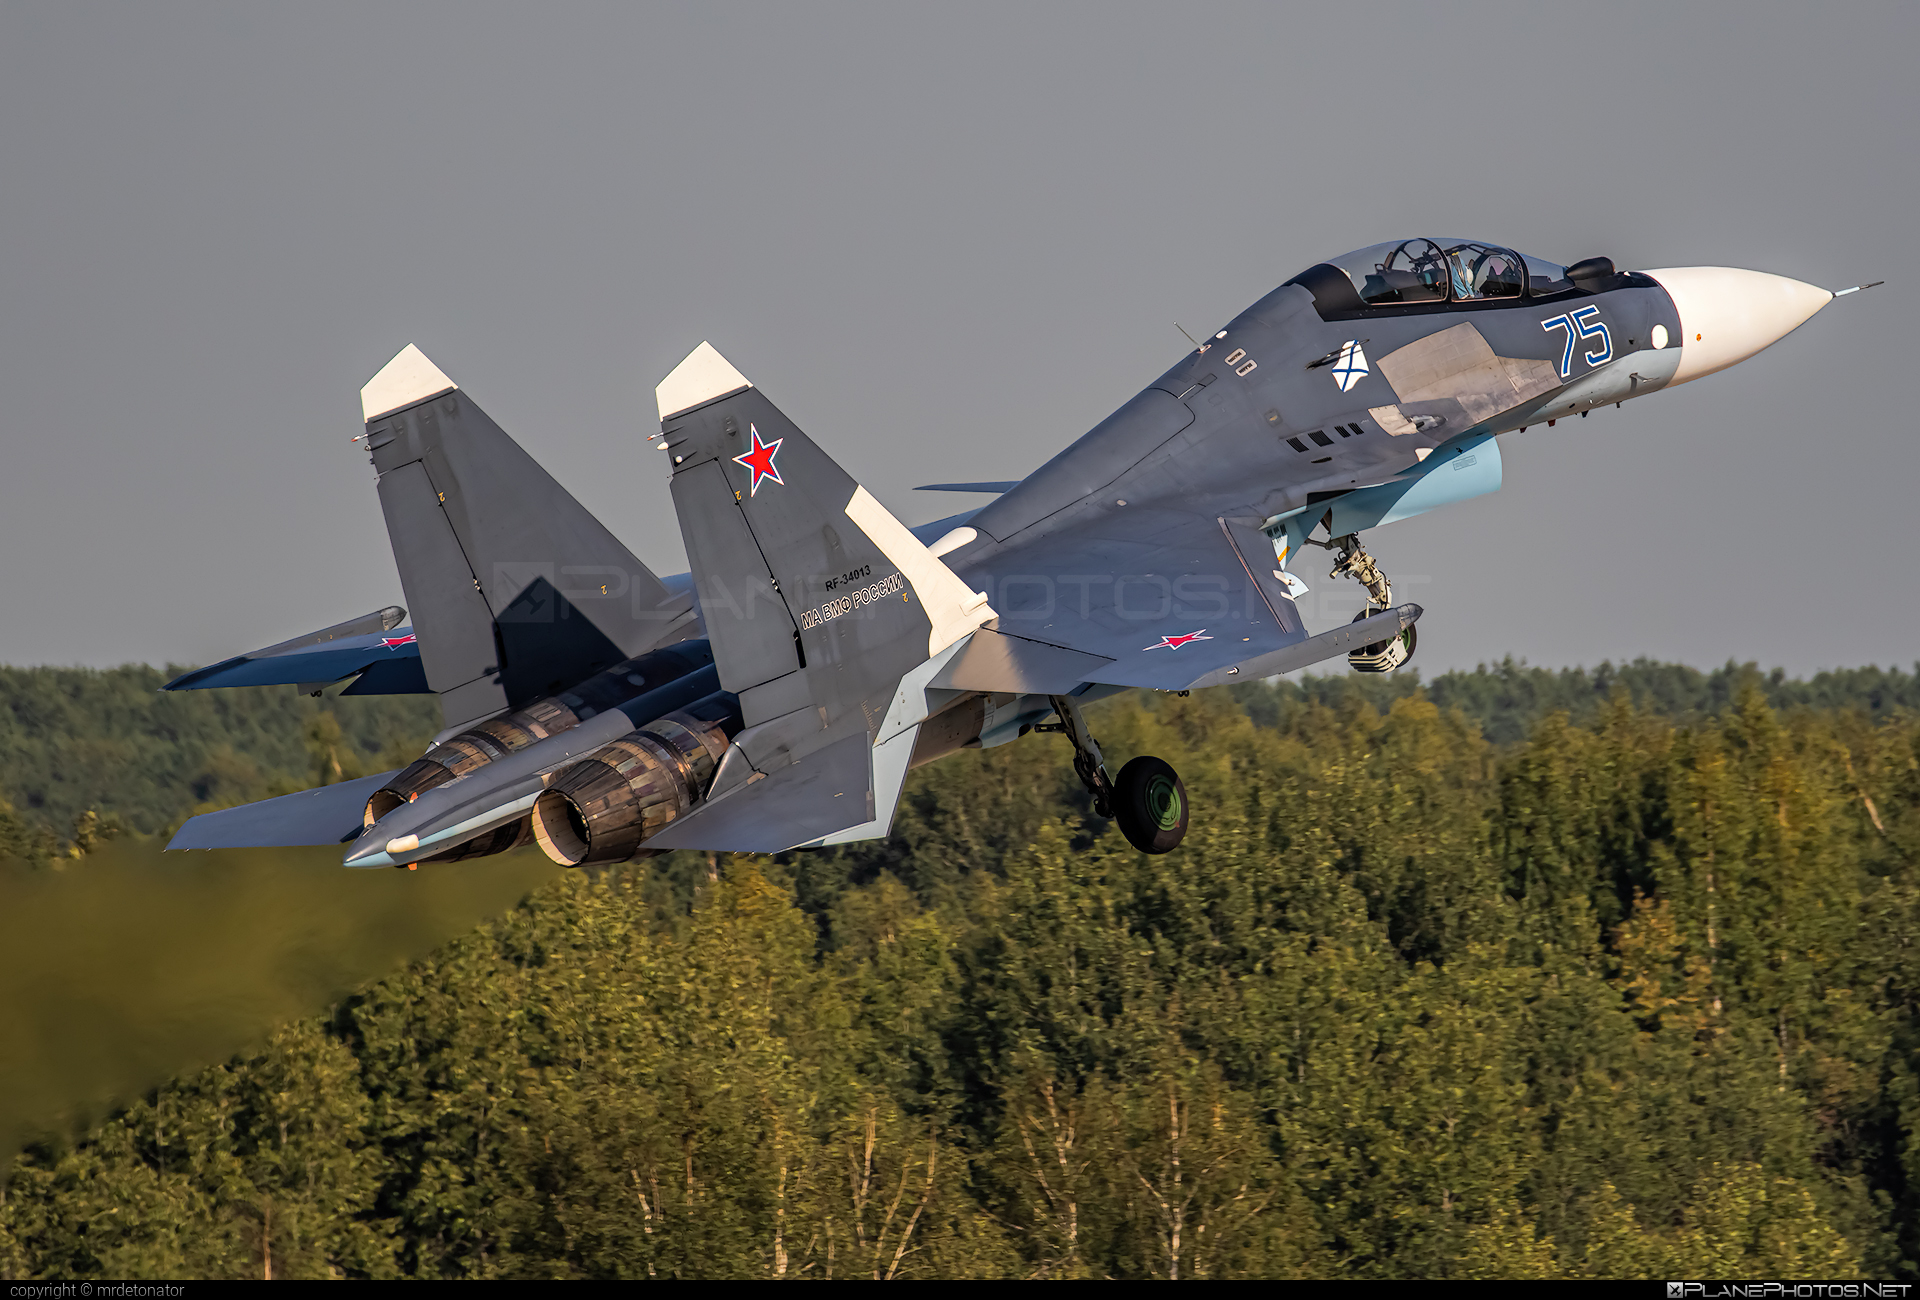 Sukhoi Su-30SM - RF-34013 operated by Voyenno-morskoy flot Rossii (Russian Navy) #maks2019 #su30 #su30sm #sukhoi #sukhoi30 #sukhoisu30sm